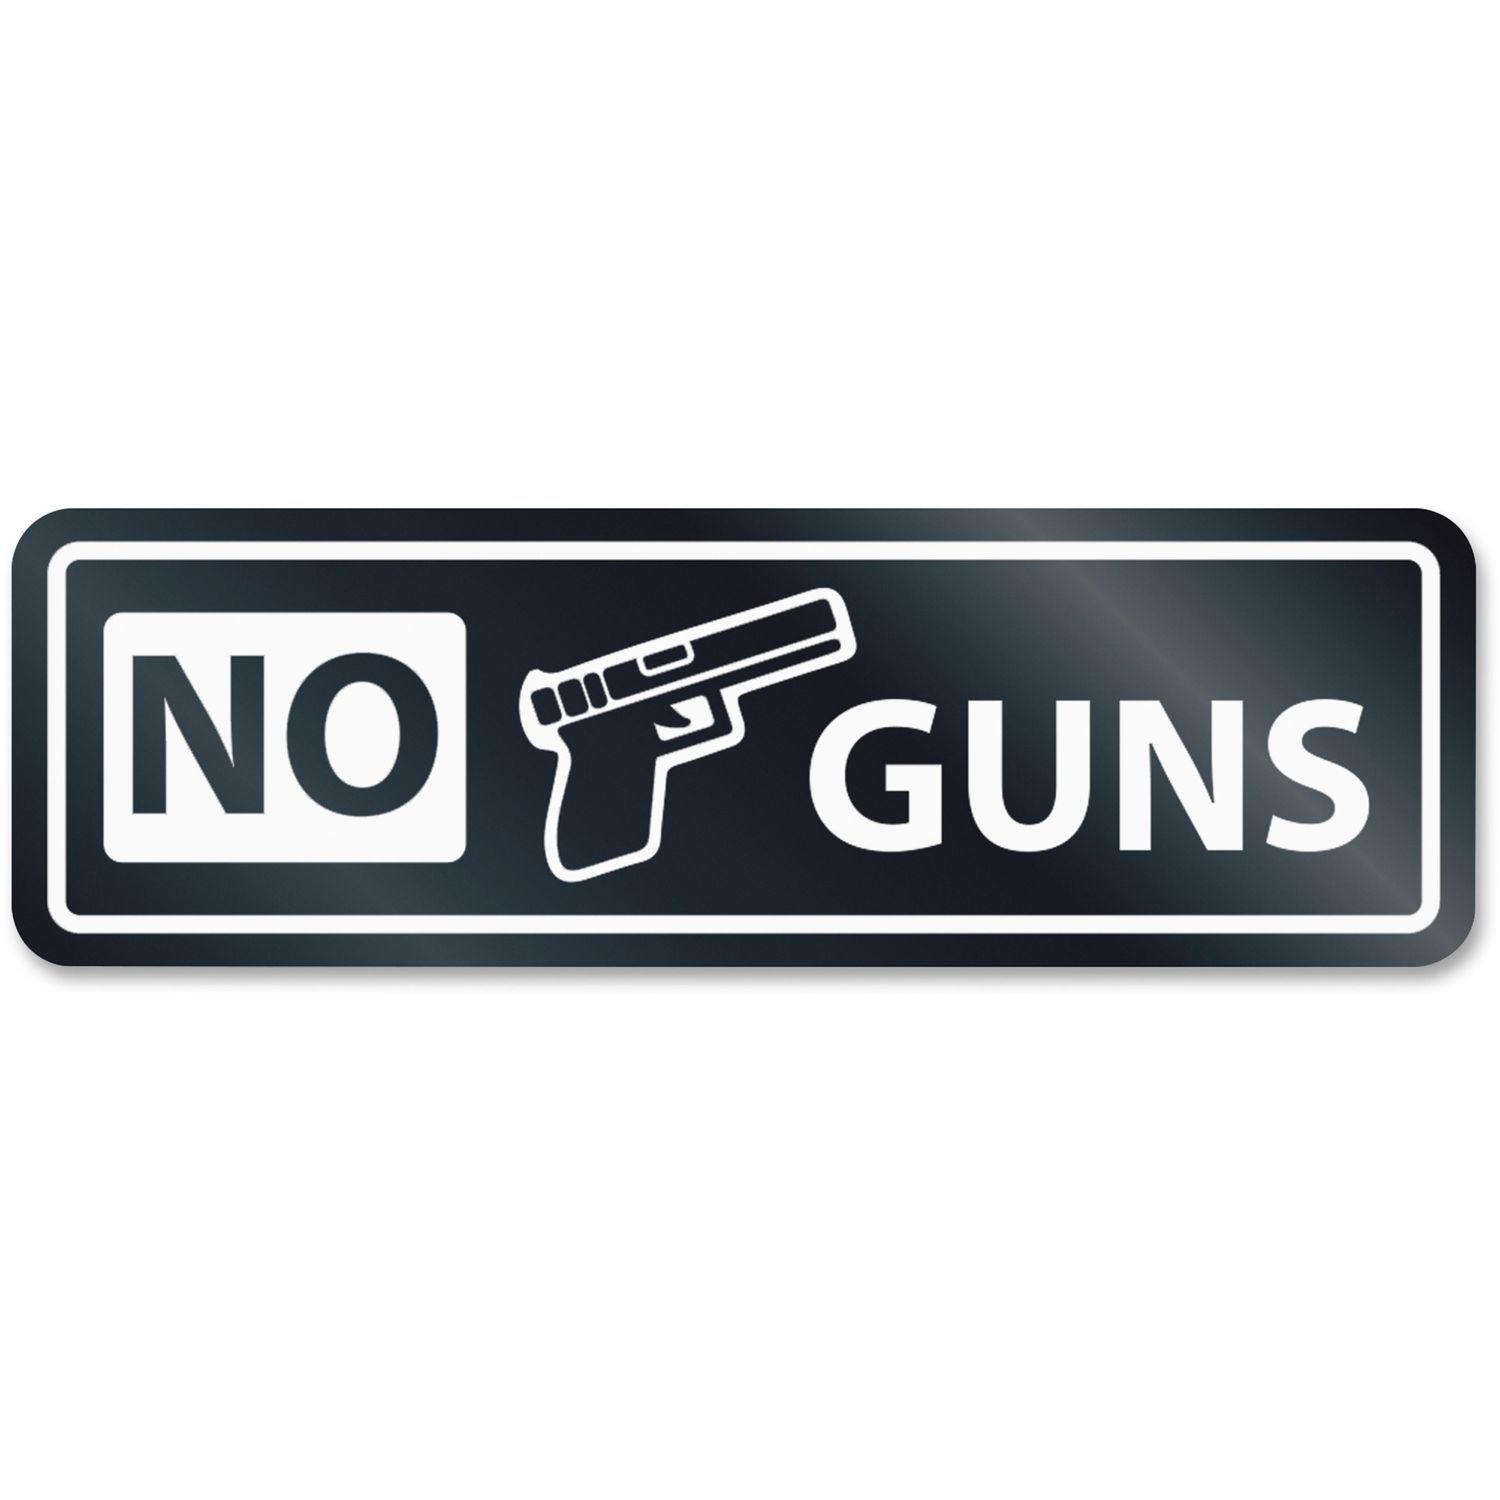 No Guns Window Sign 1 Each, NO GUNS Print/Message, Rectangular Shape, Self-adhesive, Removable, White, Clear